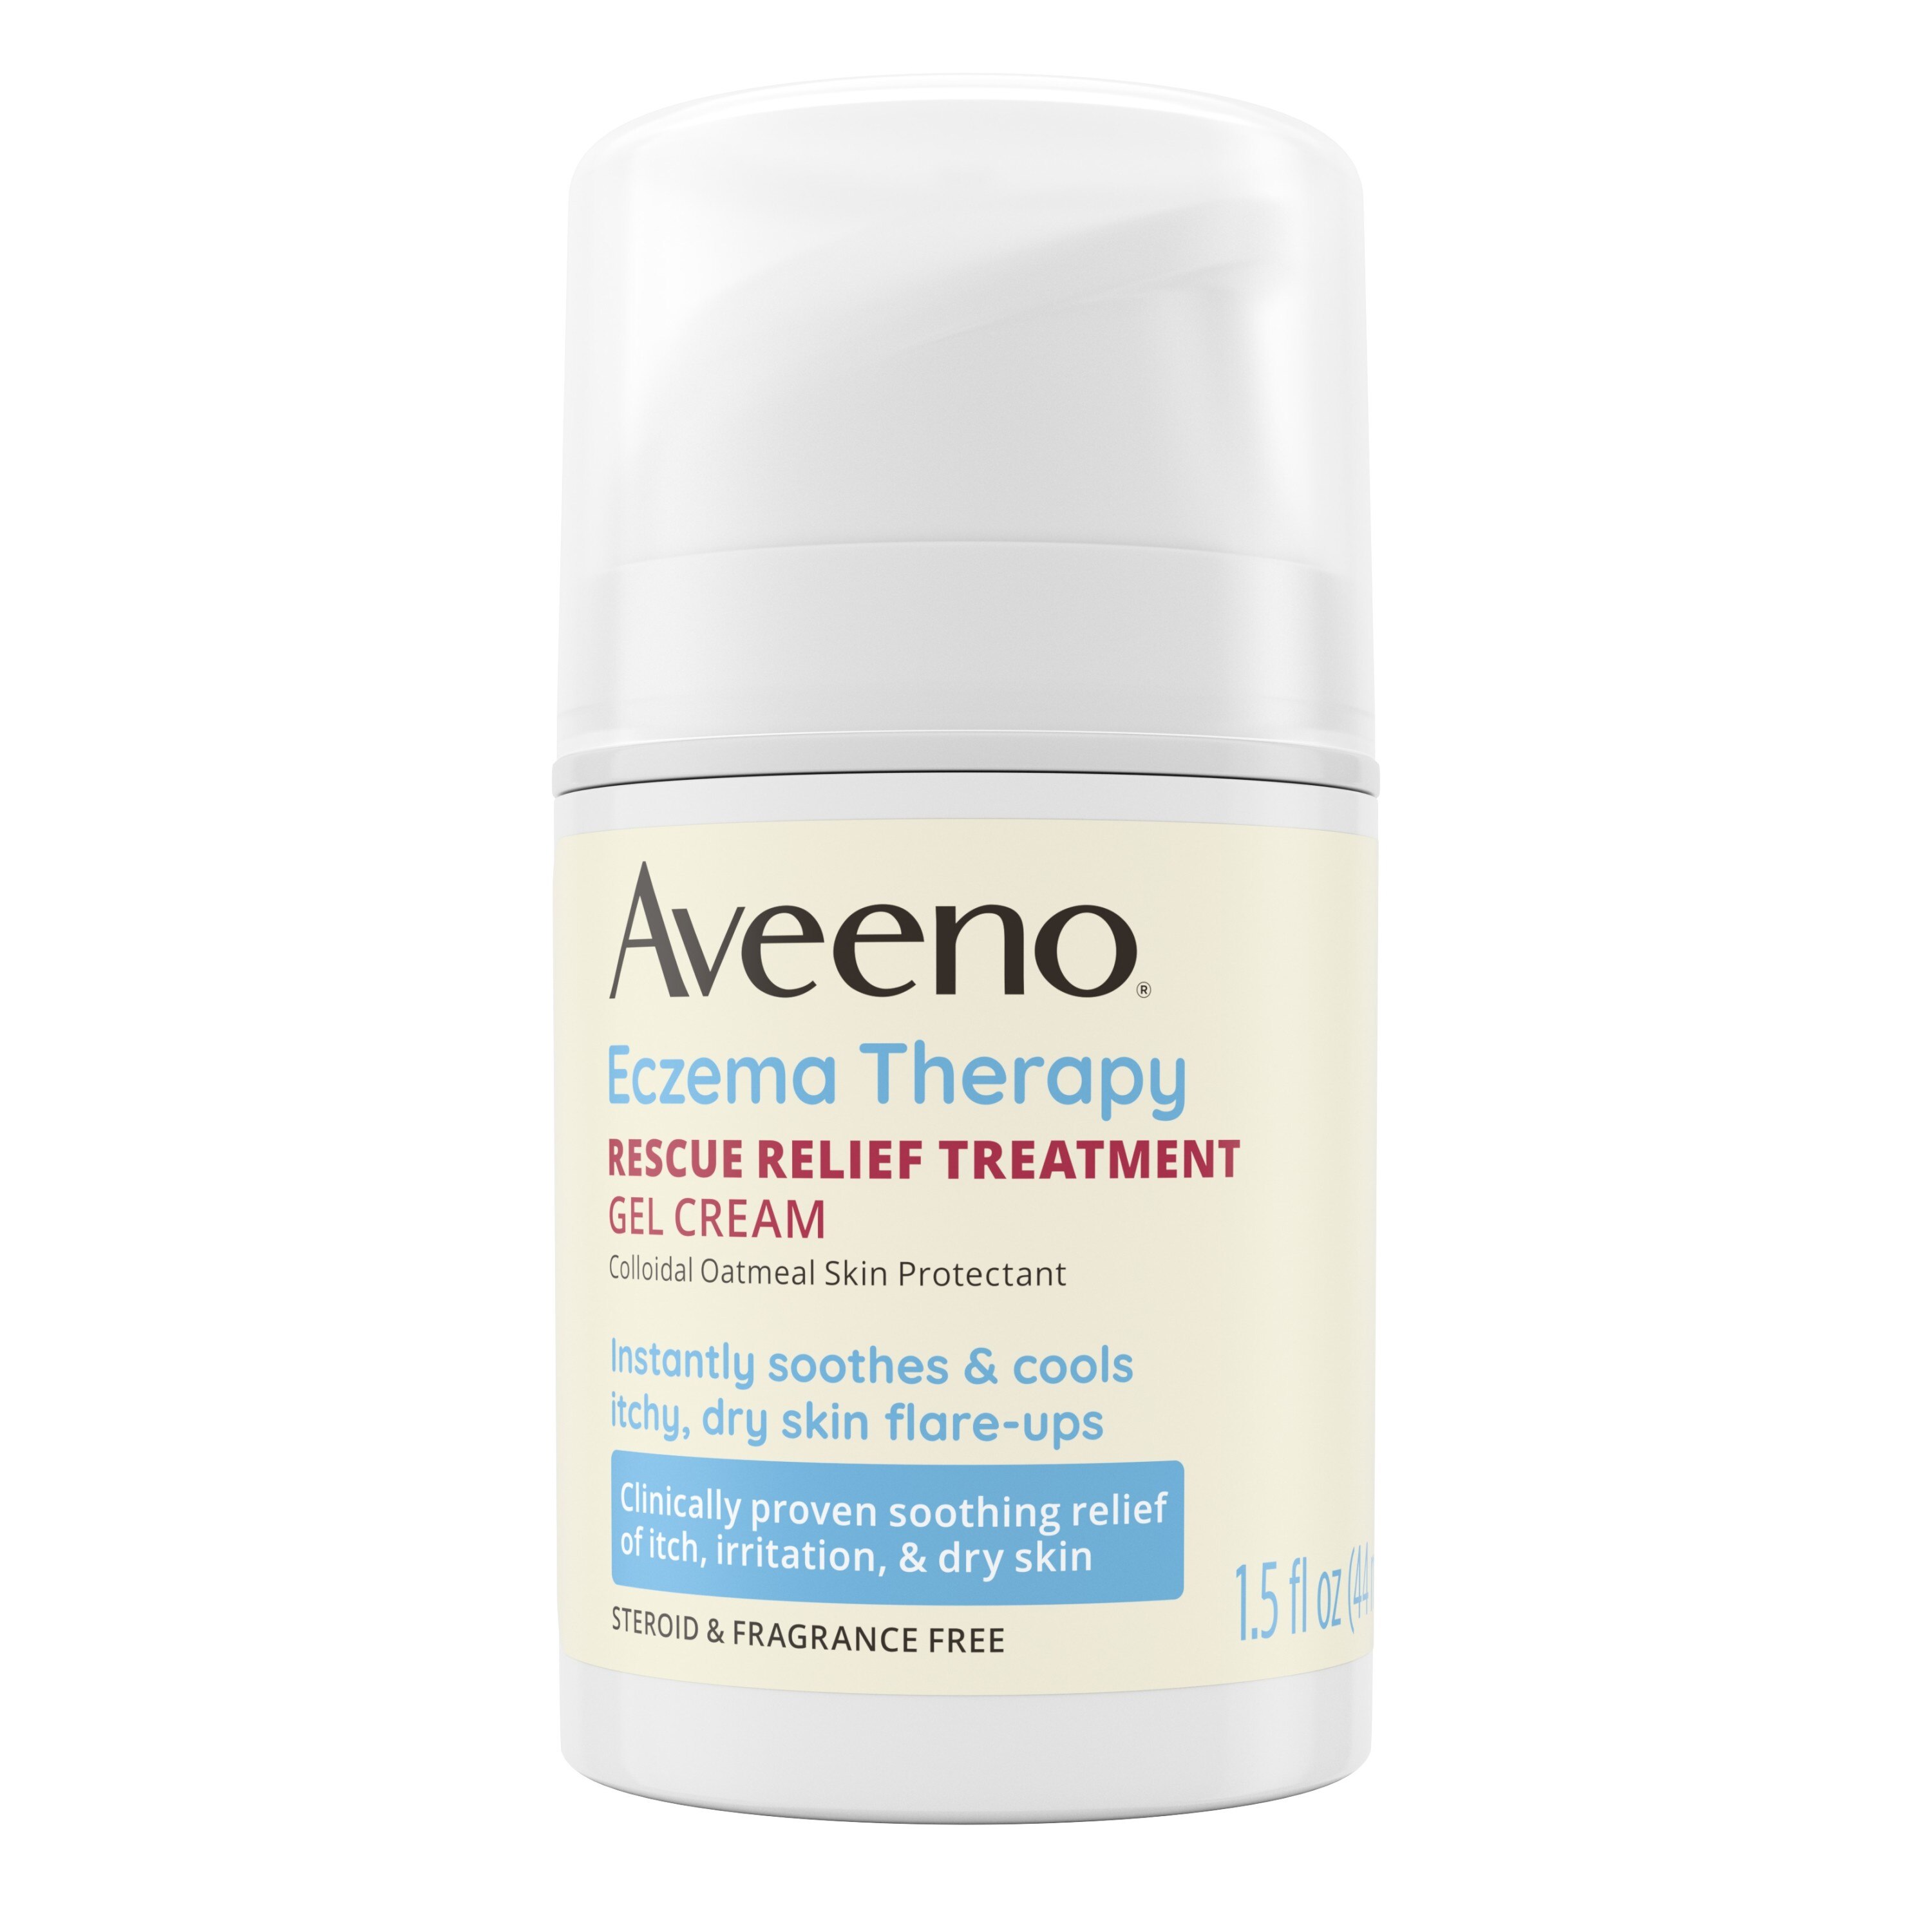 Aveeno Eczema Therapy Rescue Relief Treatment Gel Cream, 1.5 FL Oz - 1.5 Oz , CVS